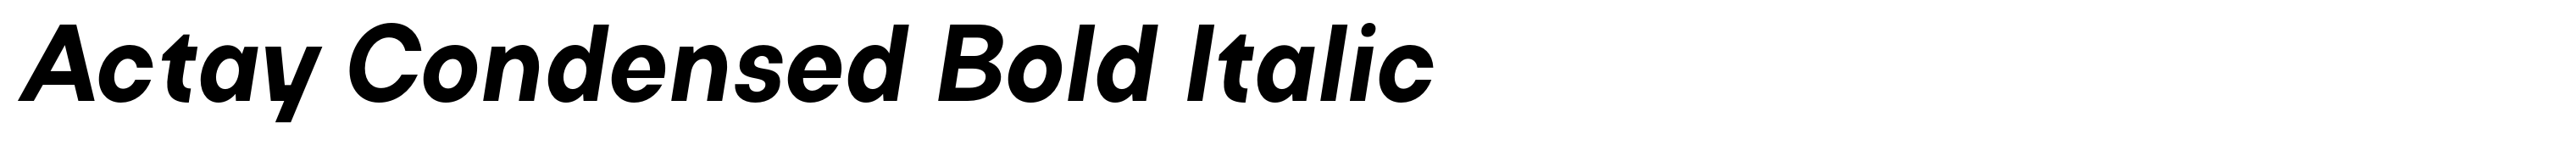 Actay Condensed Bold Italic